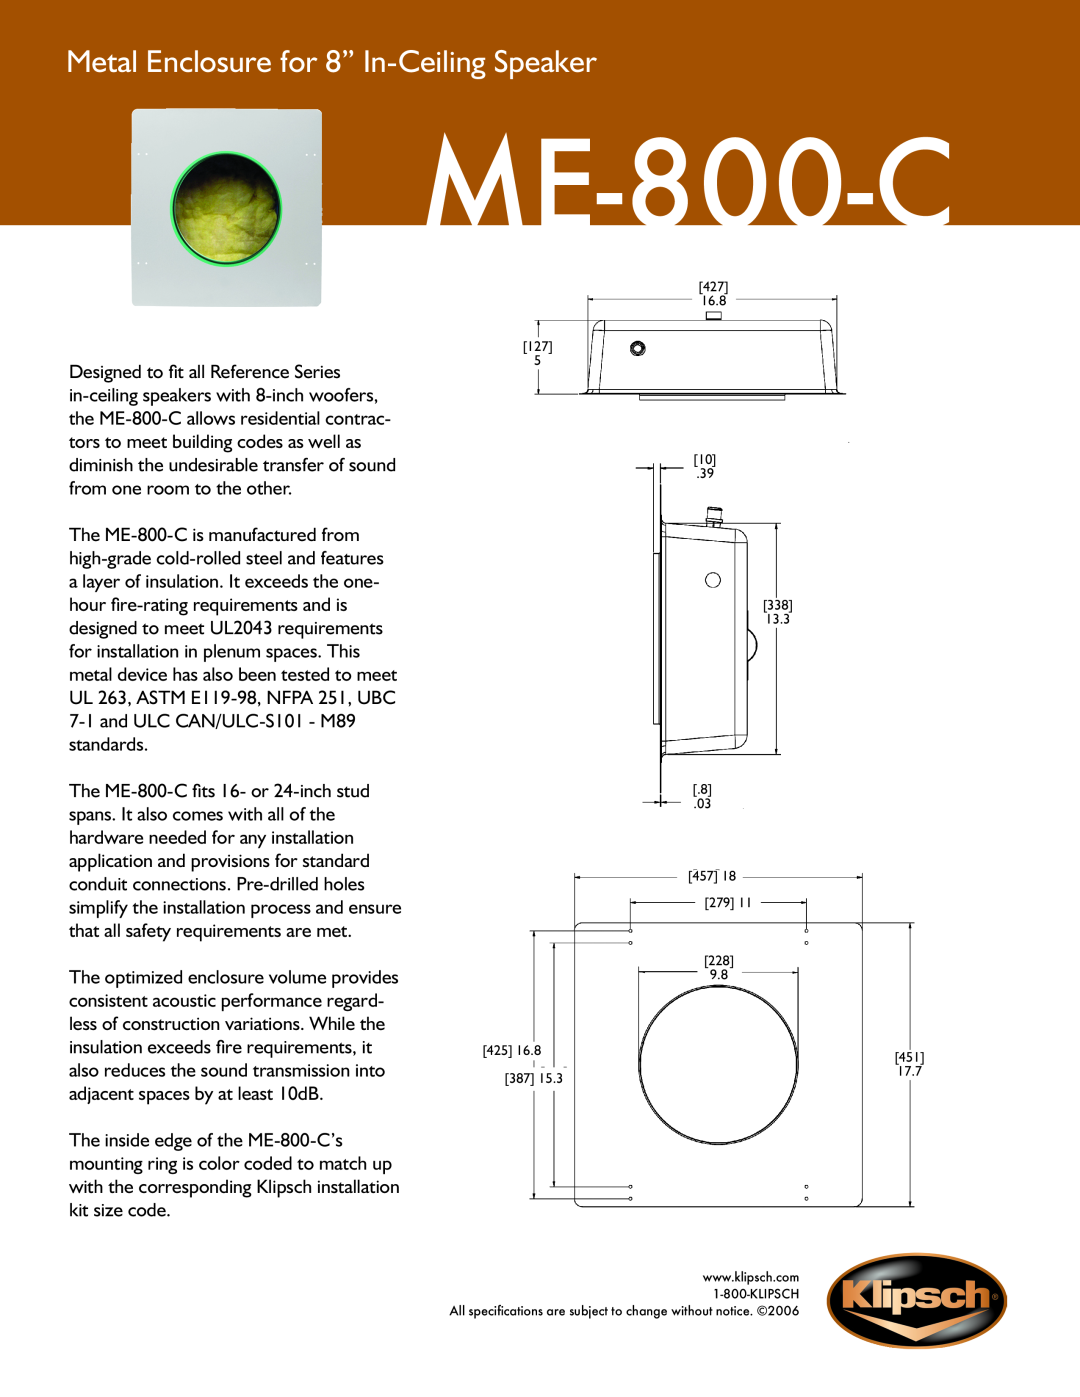 Klipsch ME-800-C specifications Metal Enclosure for 8” In-CeilingSpeaker 